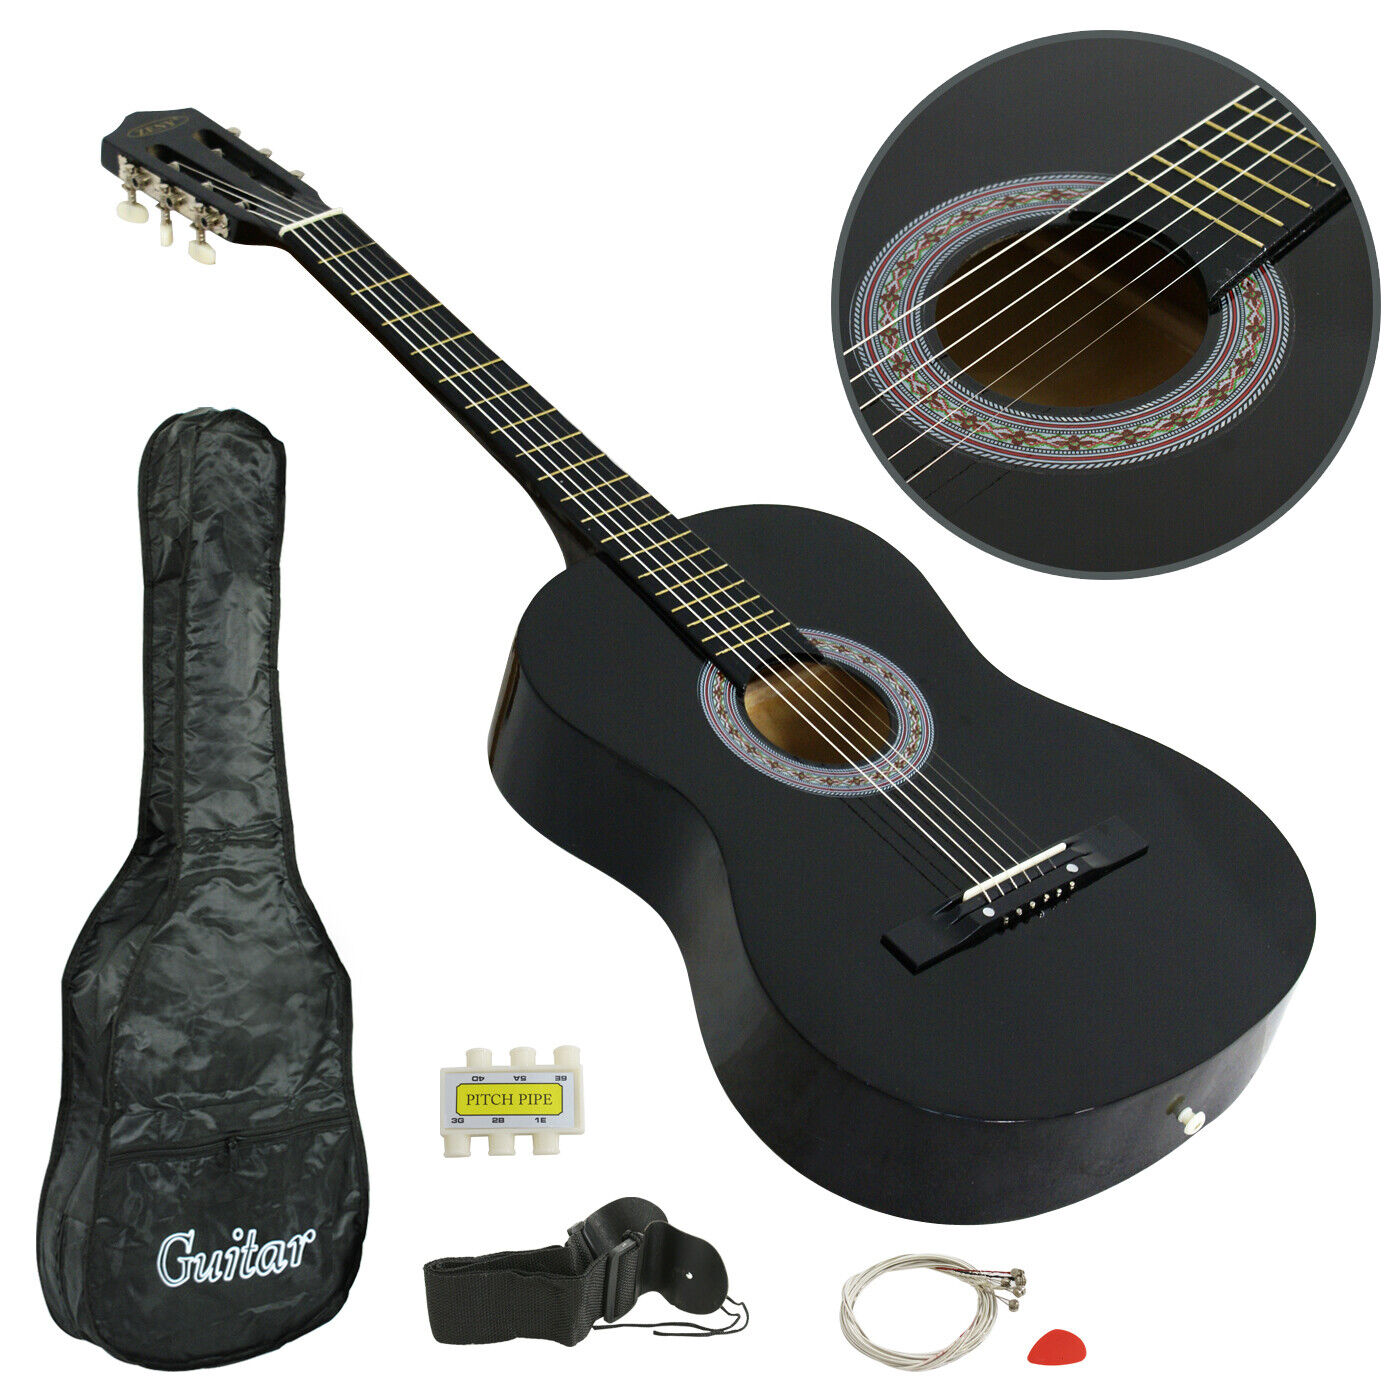 38″ Full Size Acoustic Guitar Adult Kids Beginners Black Guitar with Guitar Pick 1